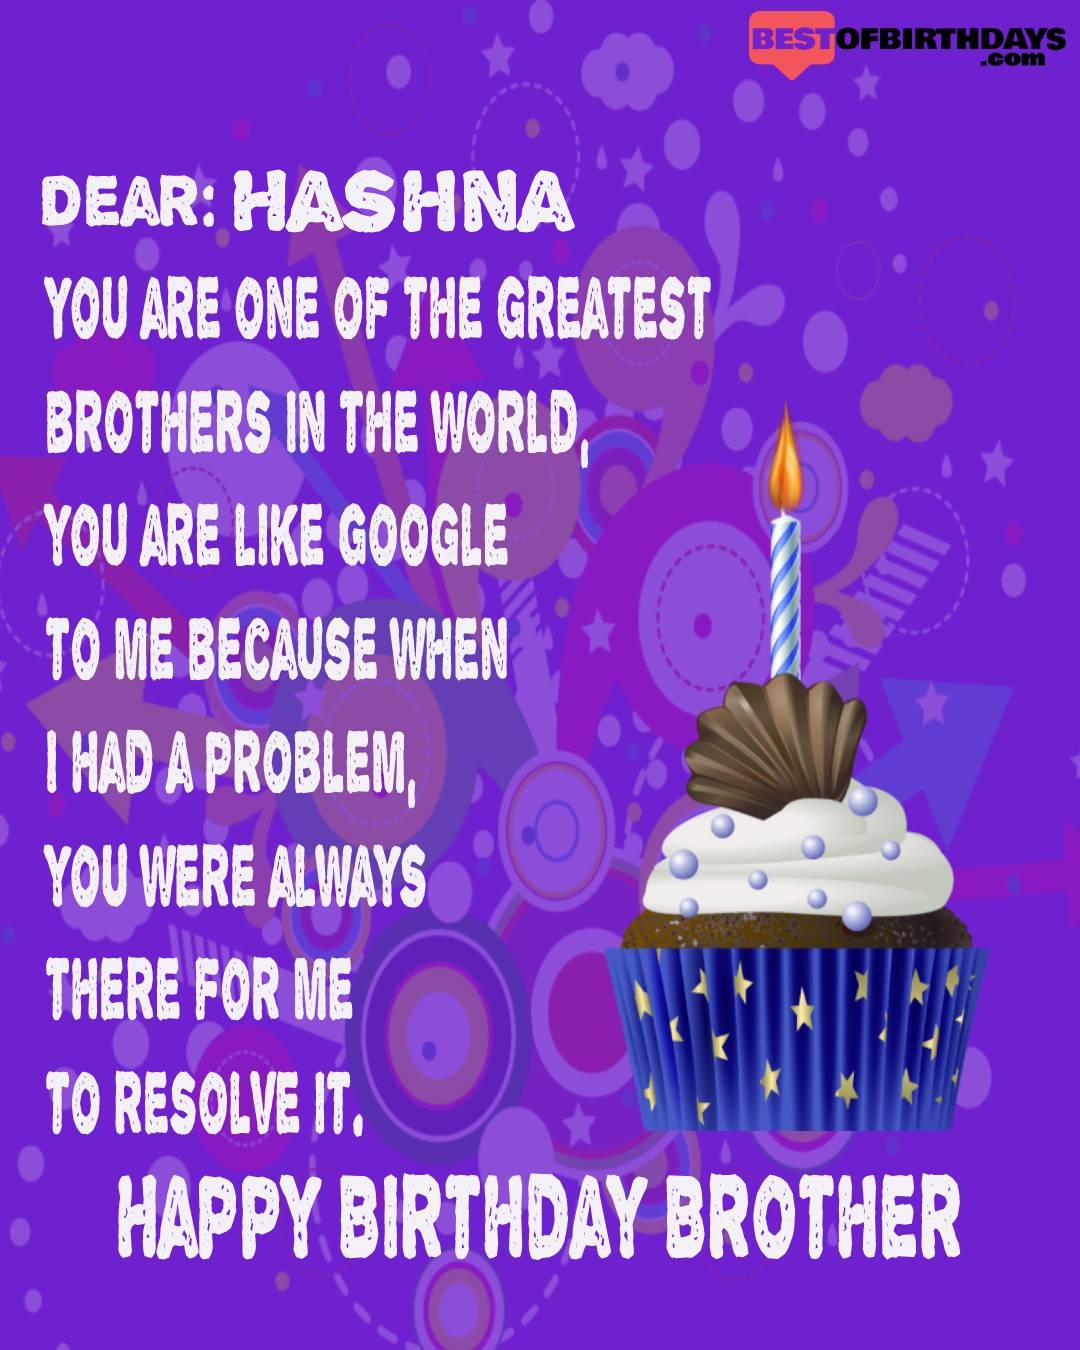 Happy birthday hashna bhai brother bro